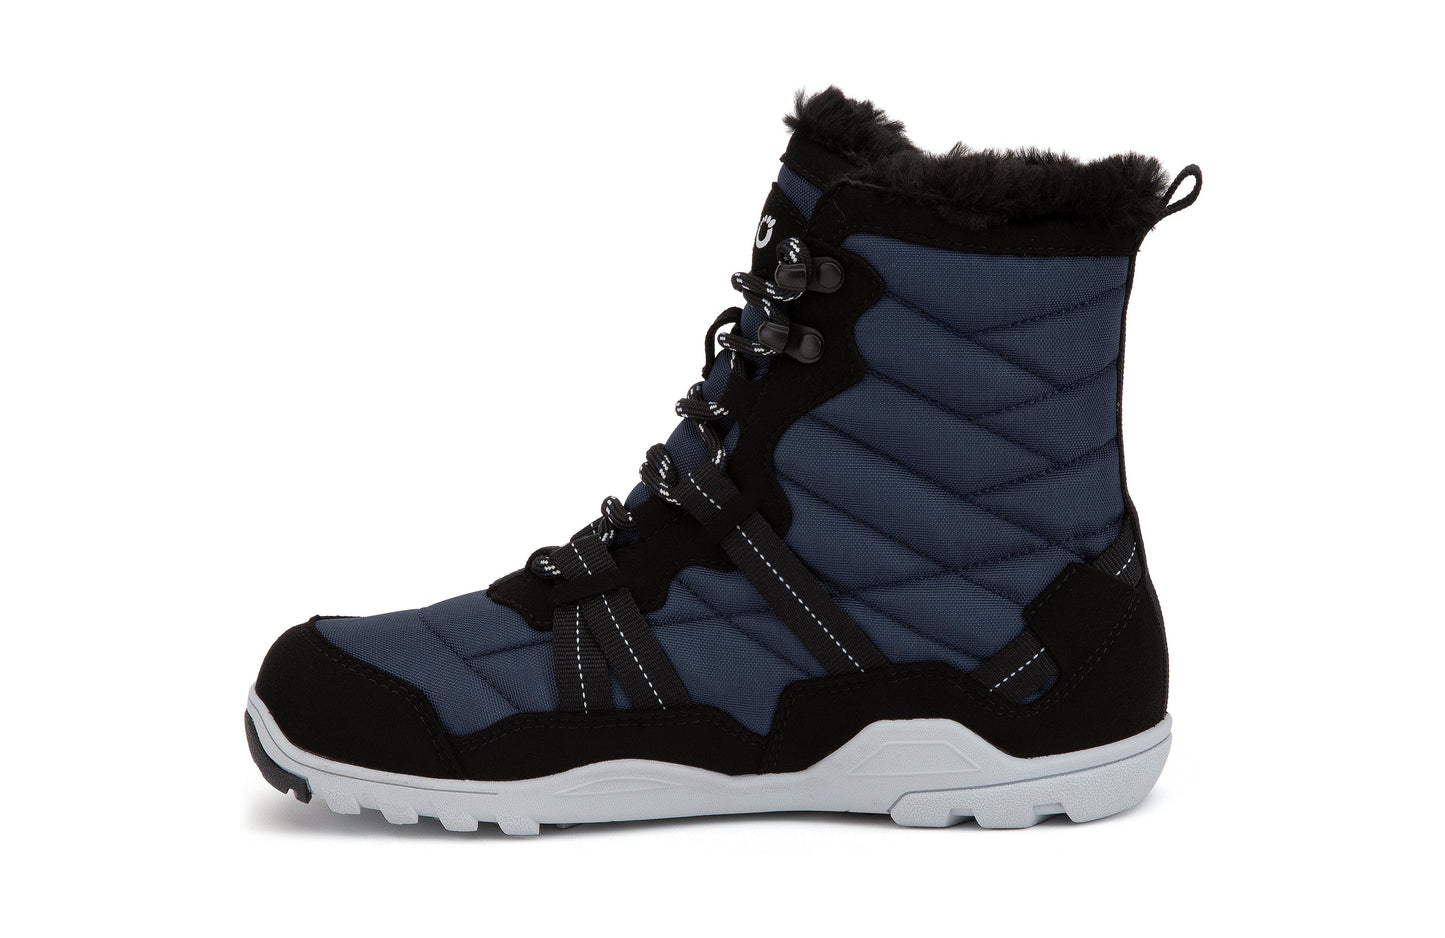 Xero Shoes Alpine Womens barfods vinterstøvler til kvinder i farven navy / black, inderside